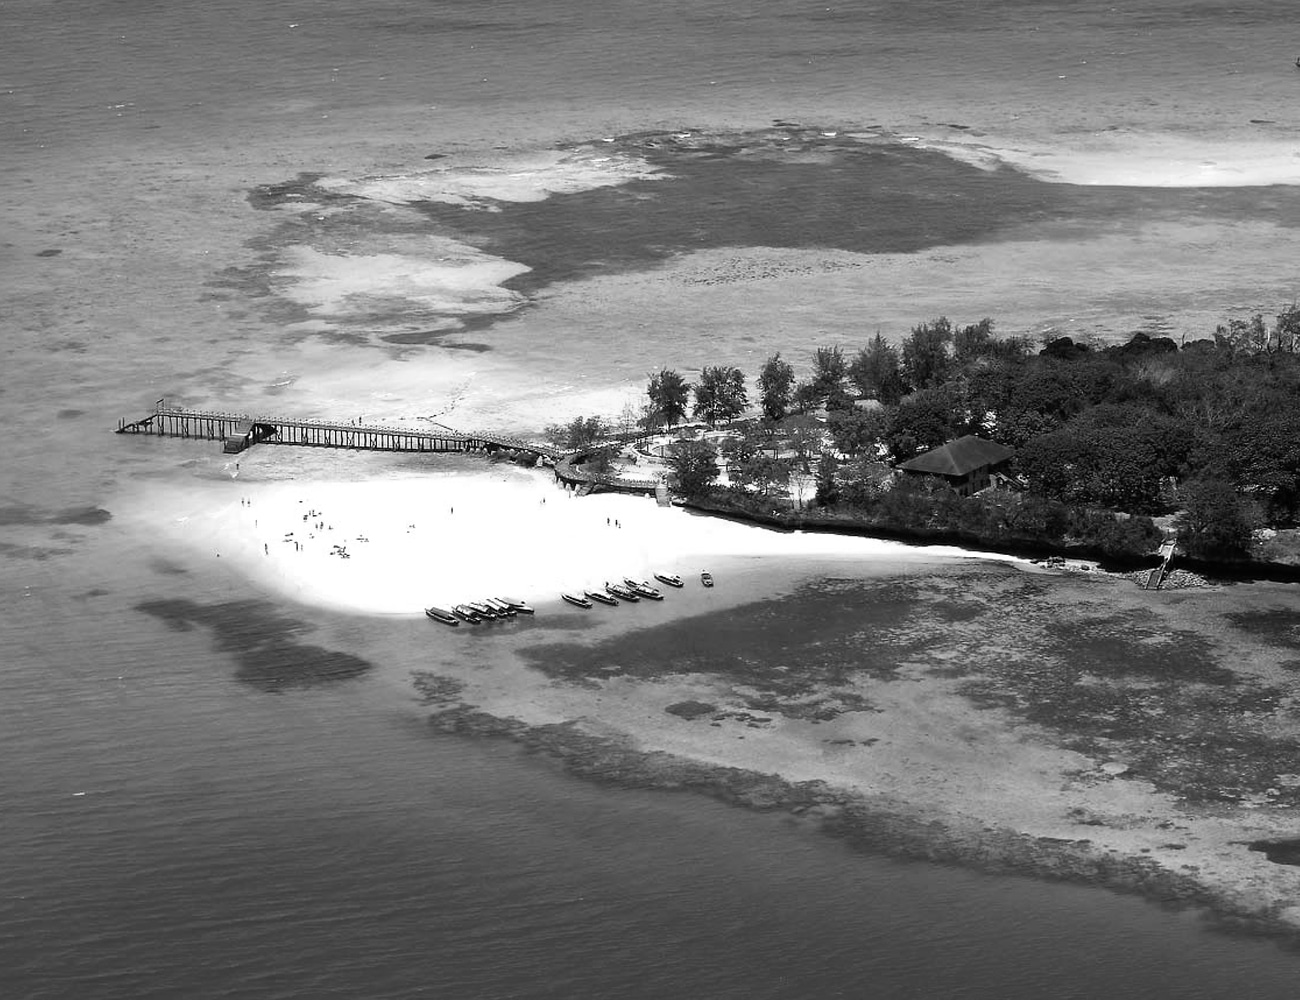 Changuu Island in Zanzibar